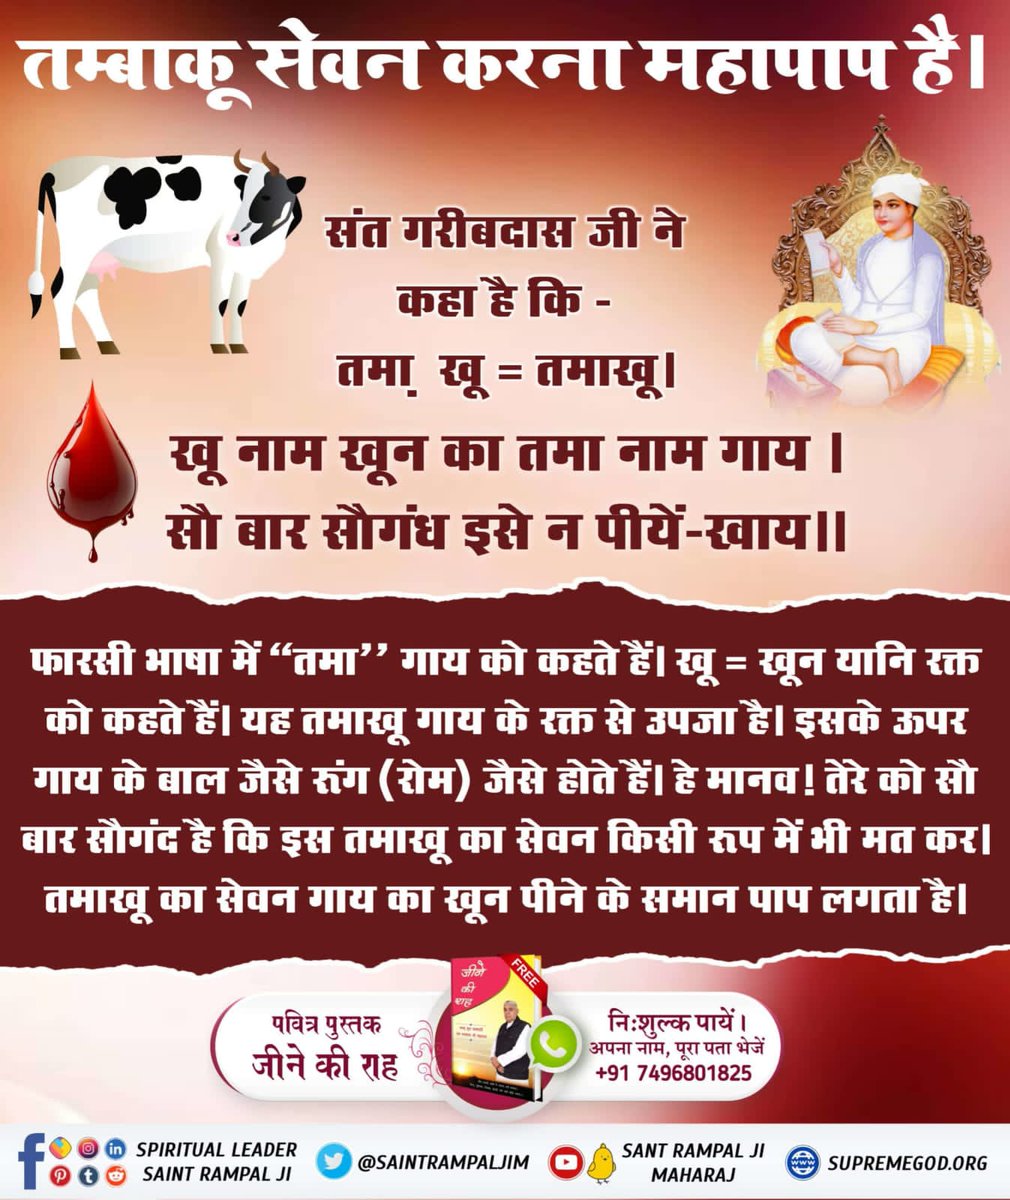 #सबपापोंमें_प्रमुख_पाप_तंबाखू
Tobacco originated from the blood of Kamdhenu cow 
Sant Rampal Ji Maharaj